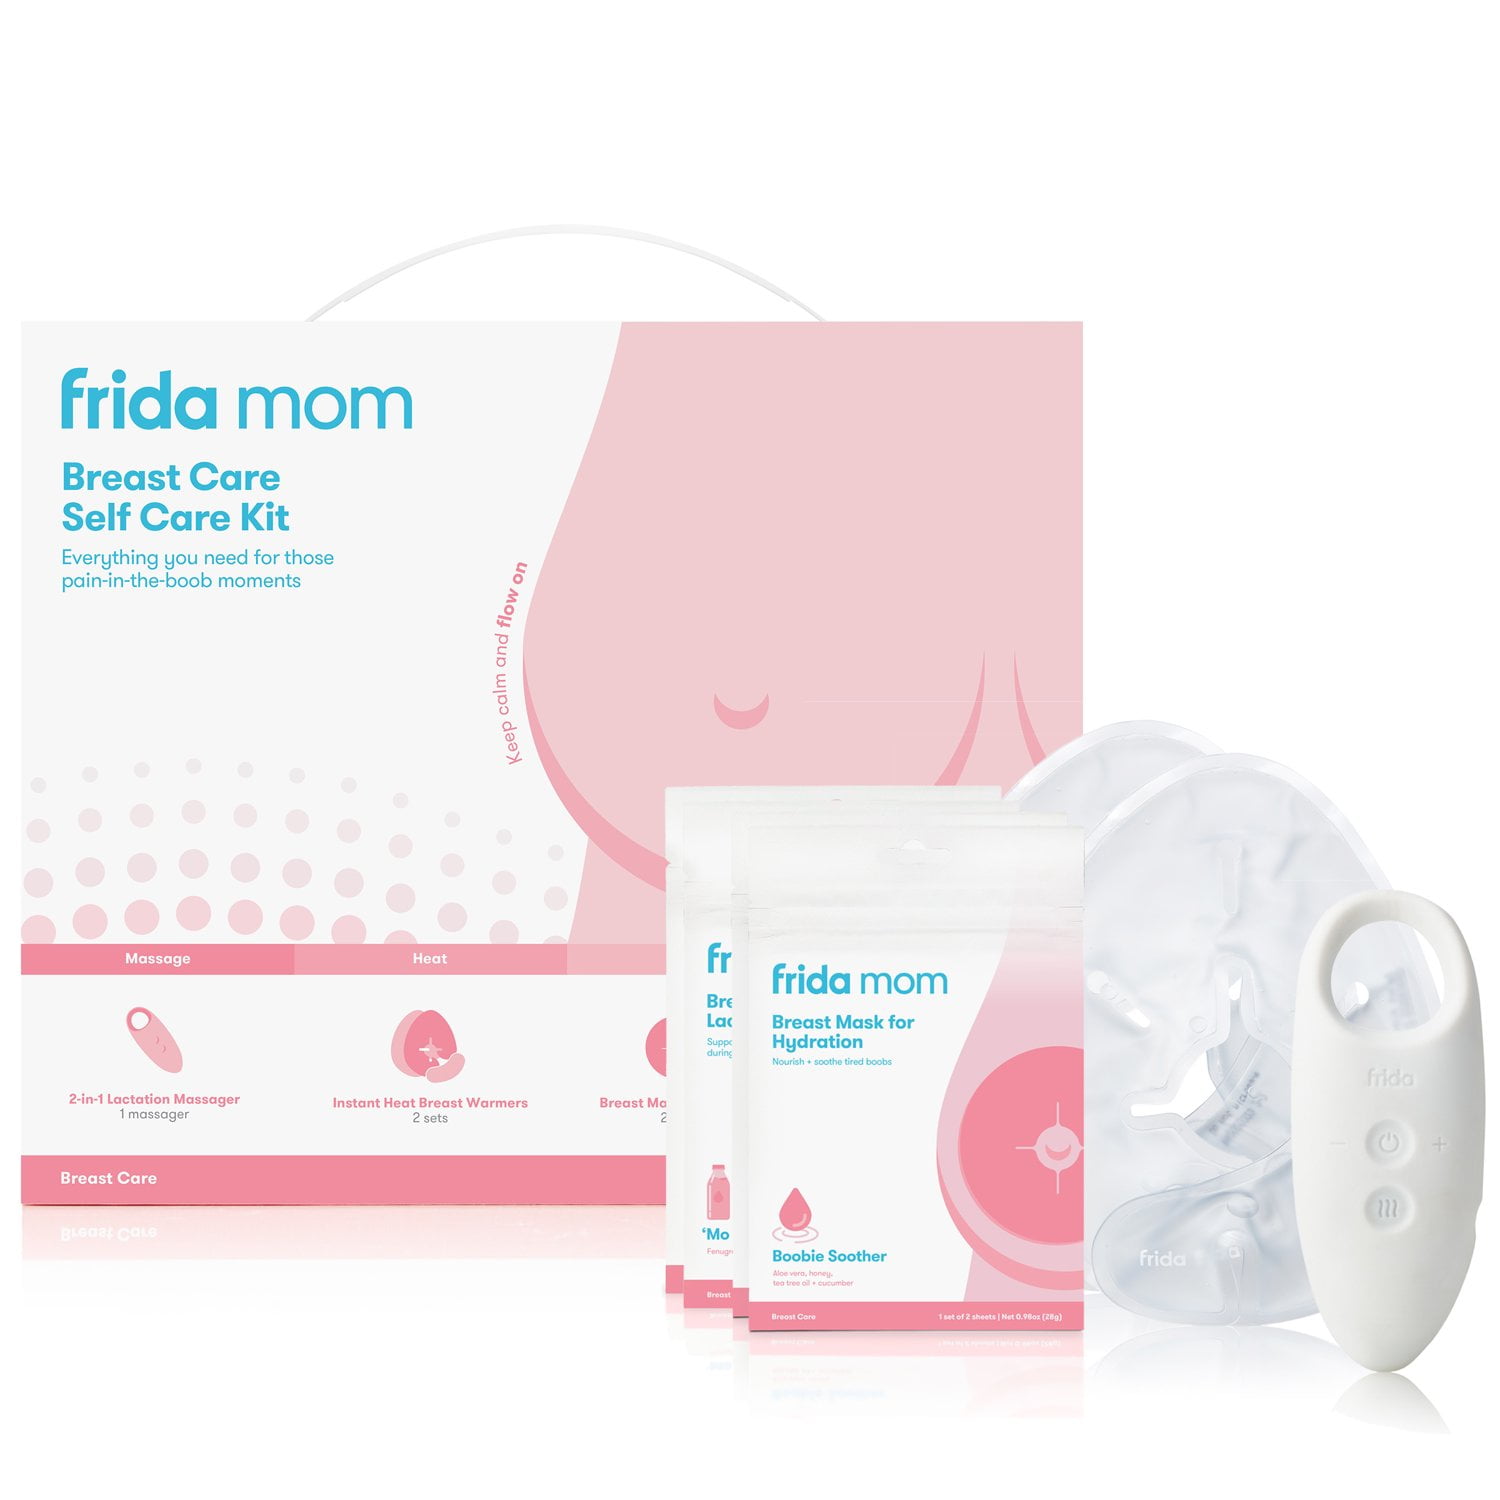 Frida Mom Pregnancy No-Friction Anti-Chafe Glide Stick - 1.7 oz